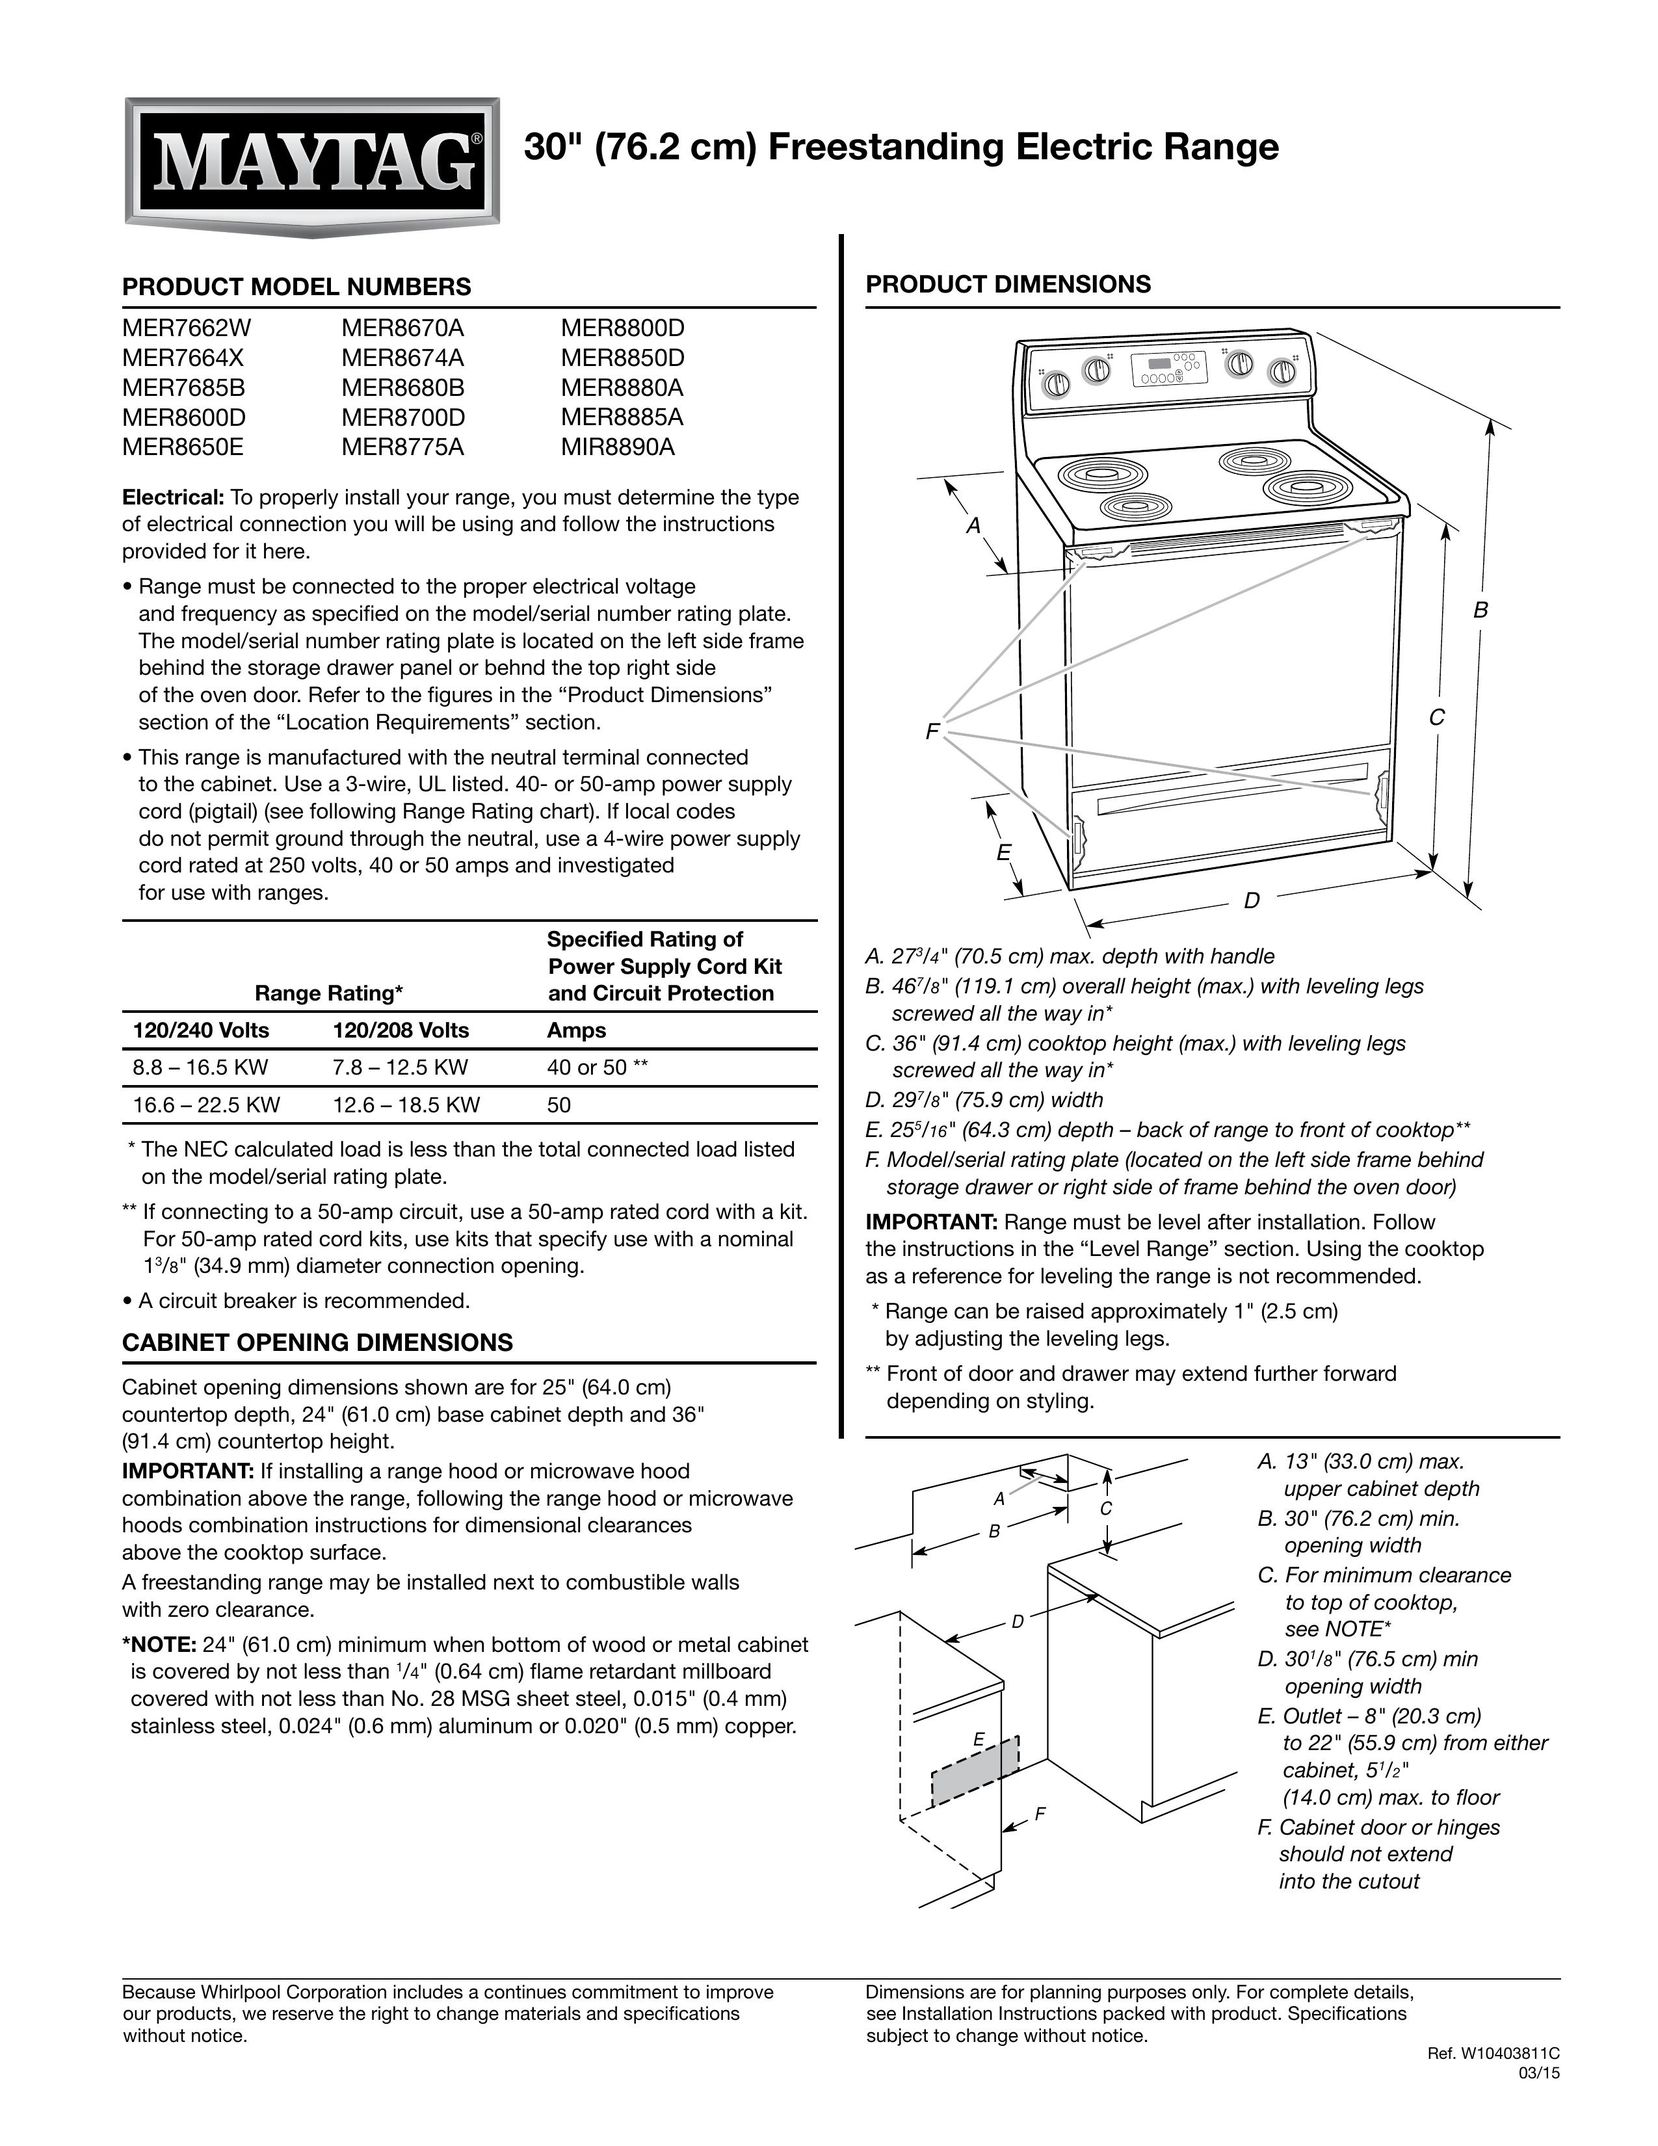 Maytag MER7664X Cooktop User Manual